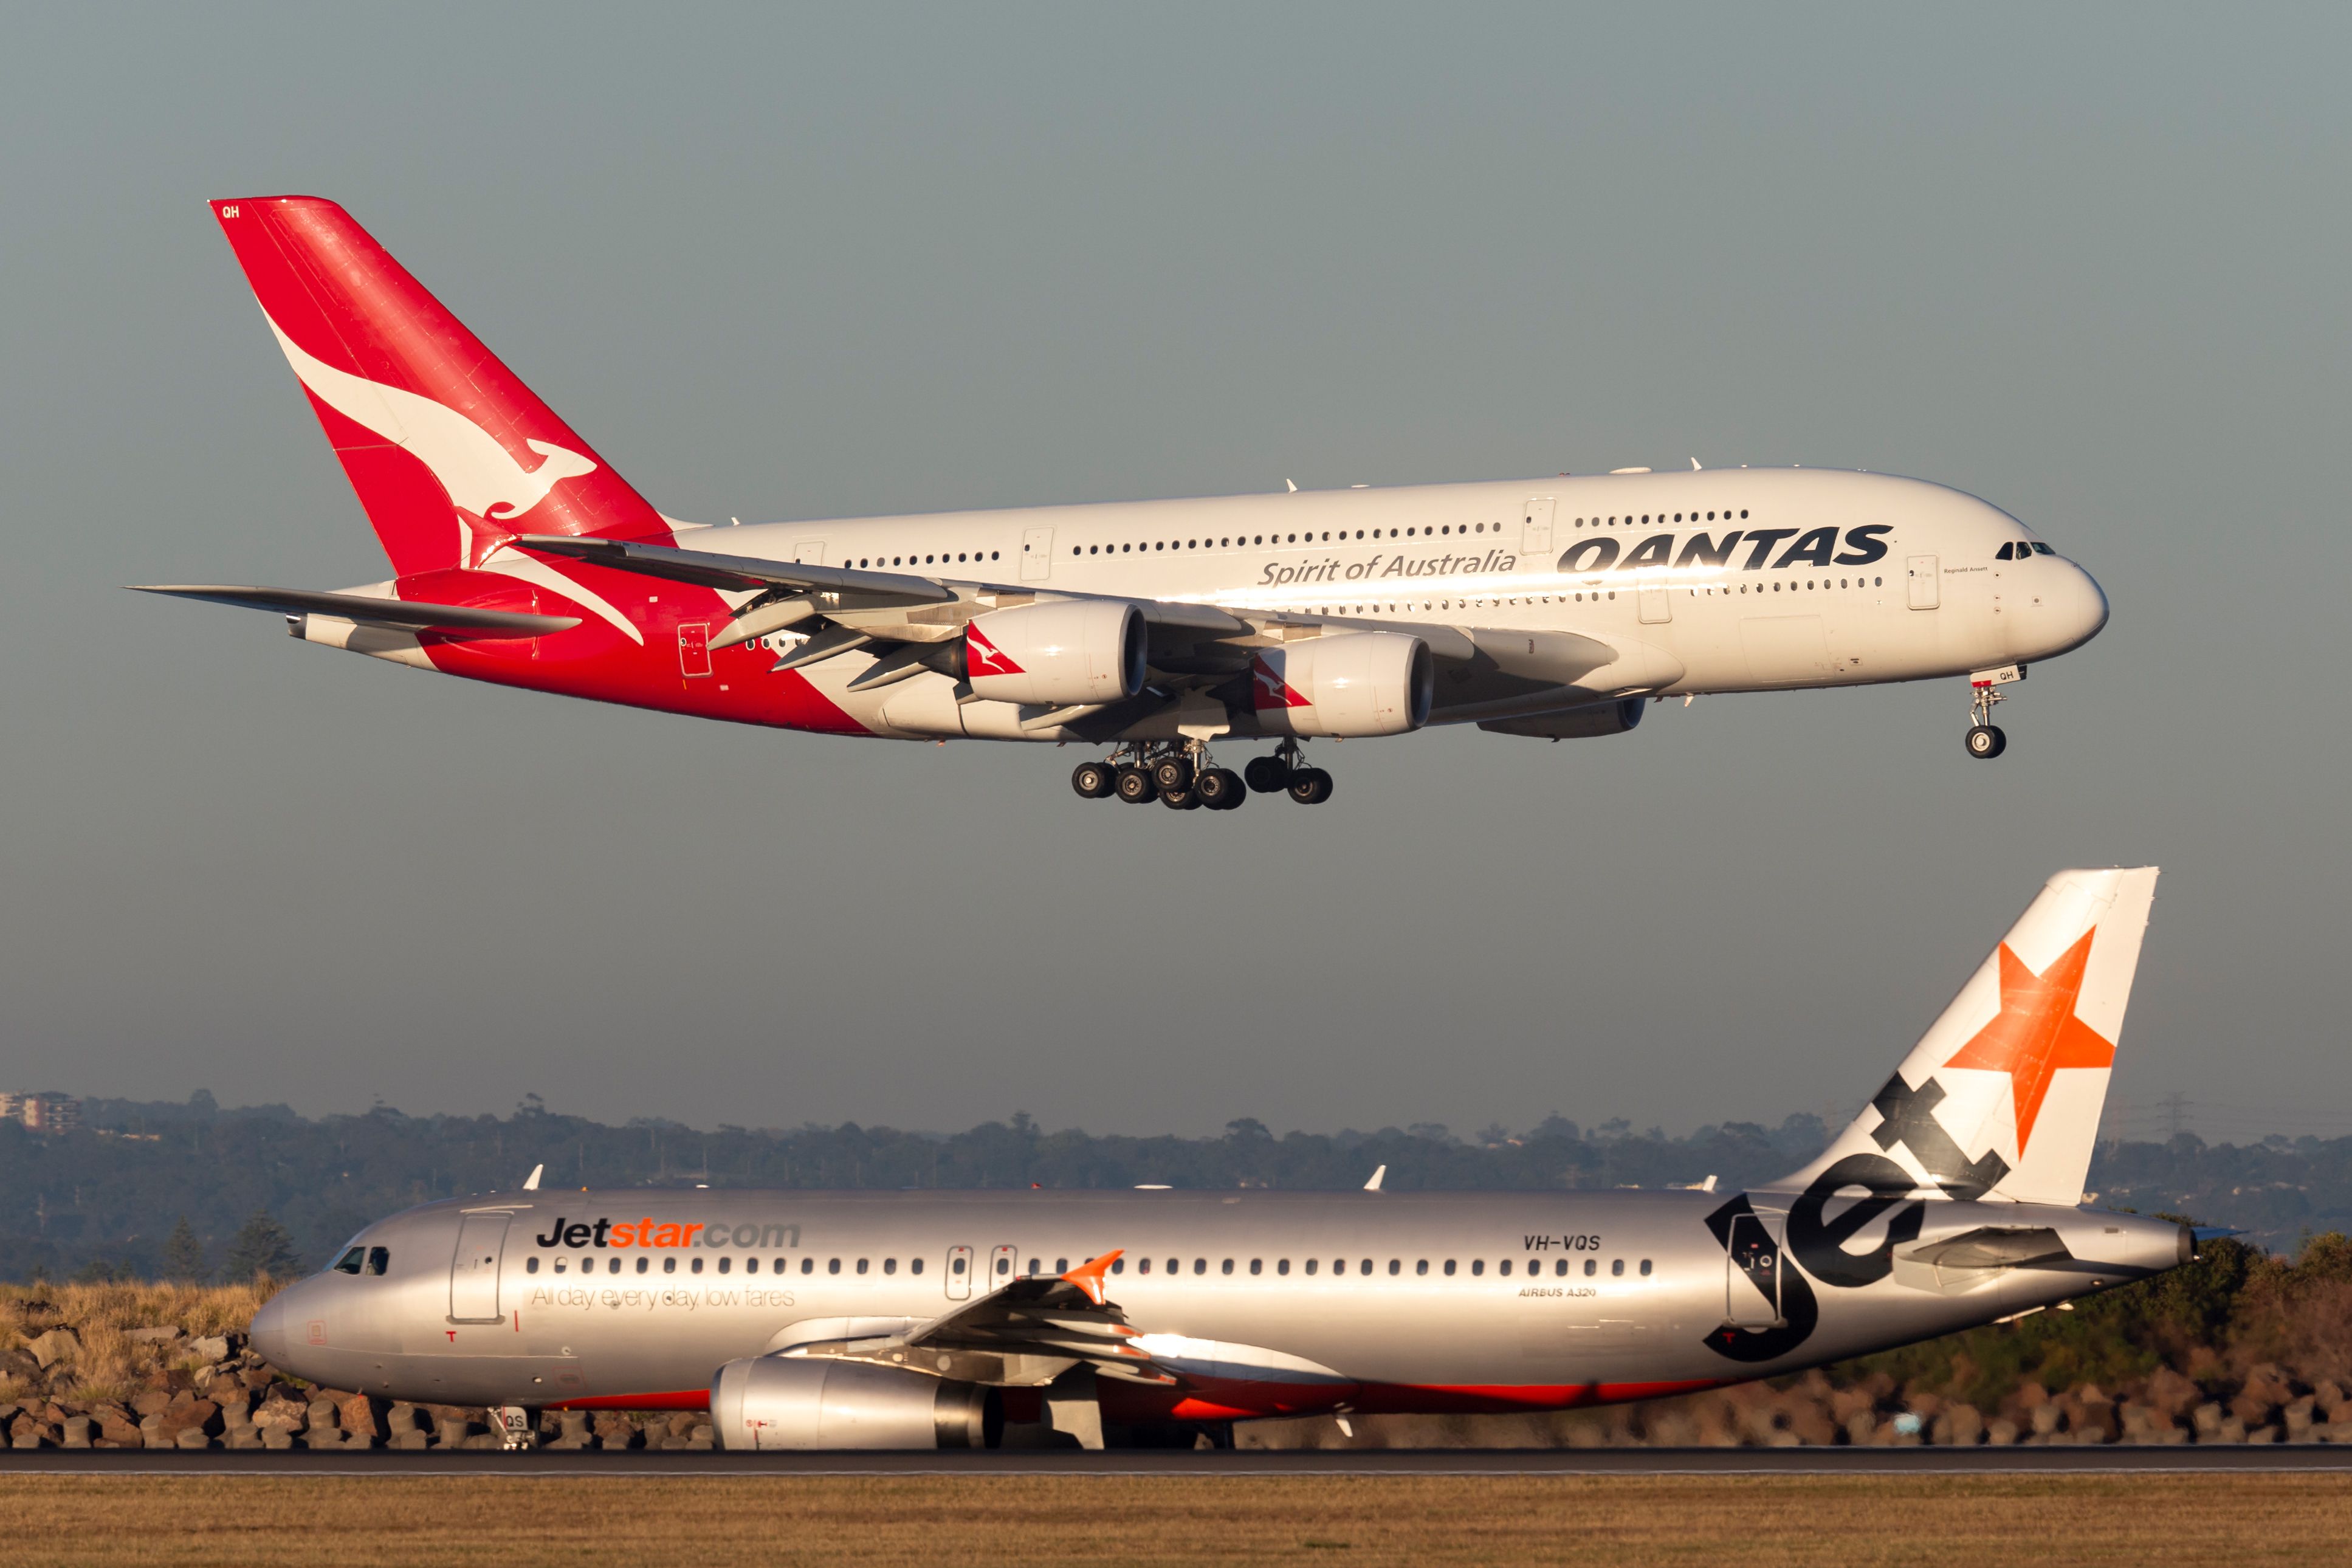 Qantas Airbus A380 and Jetstar A320